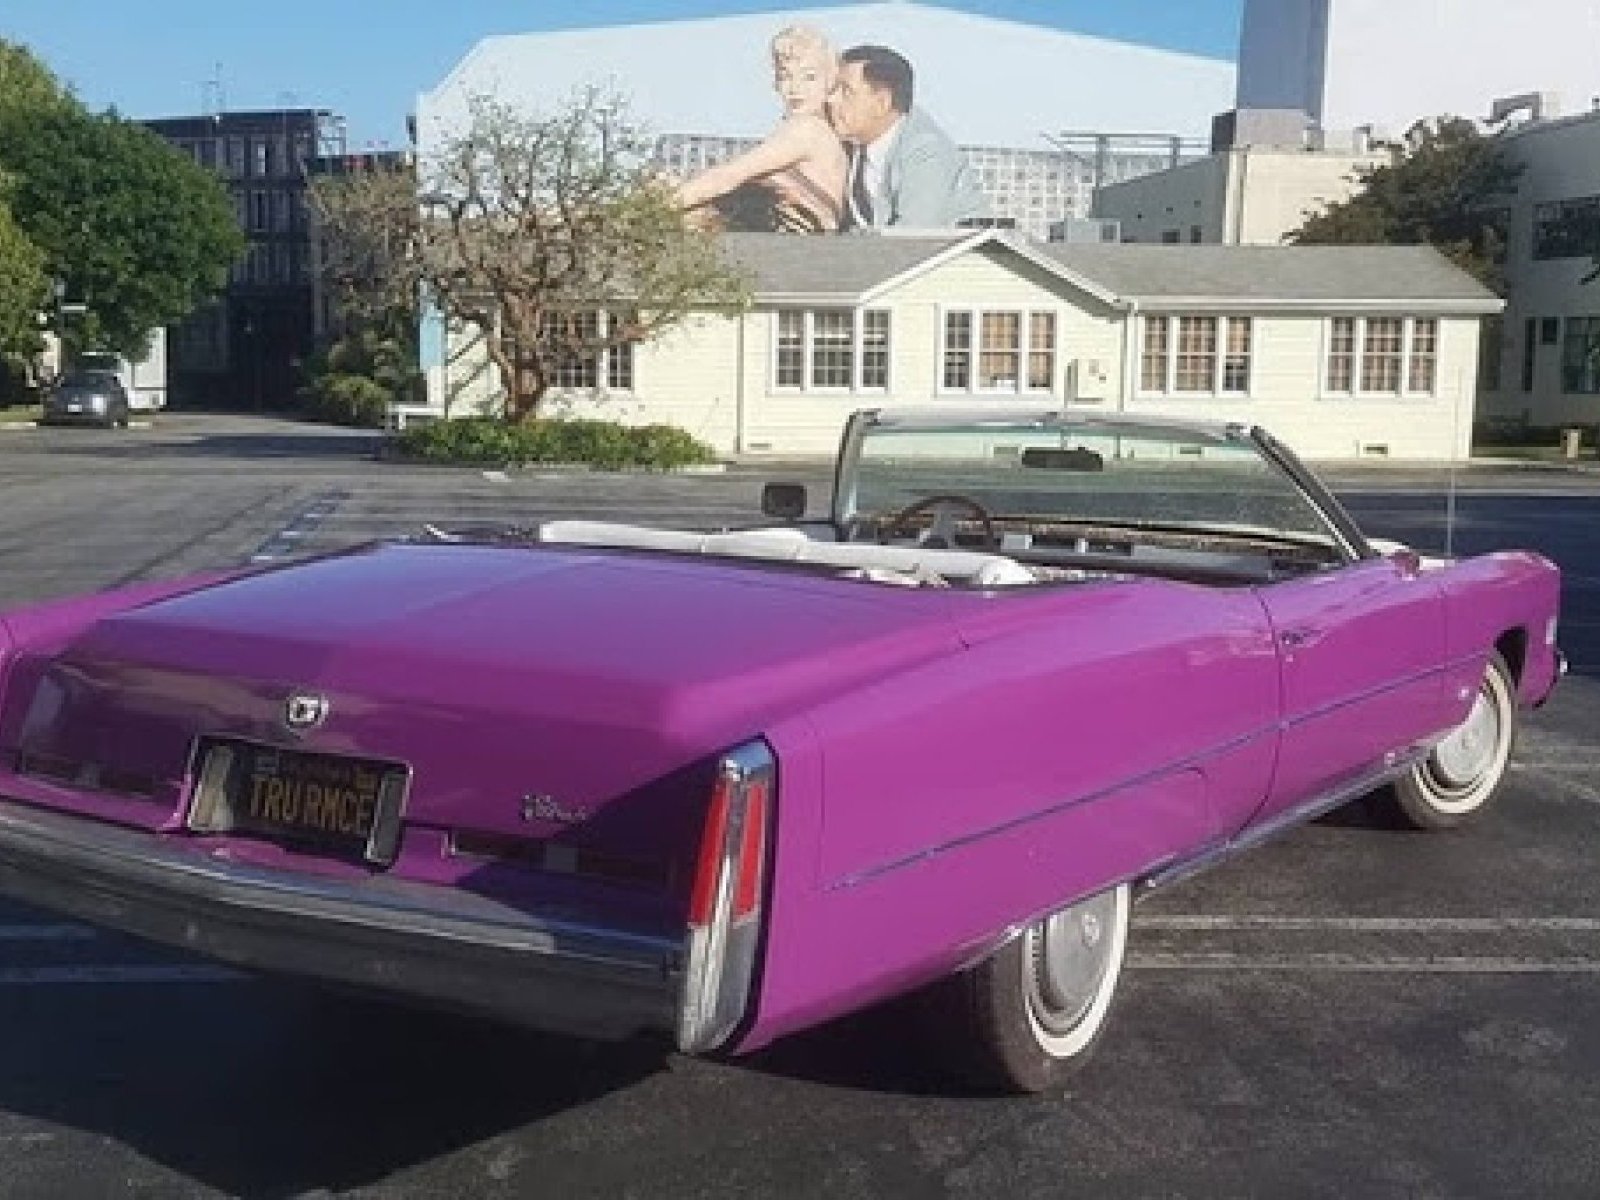 1974 Cadillac Eldorado from True Romance